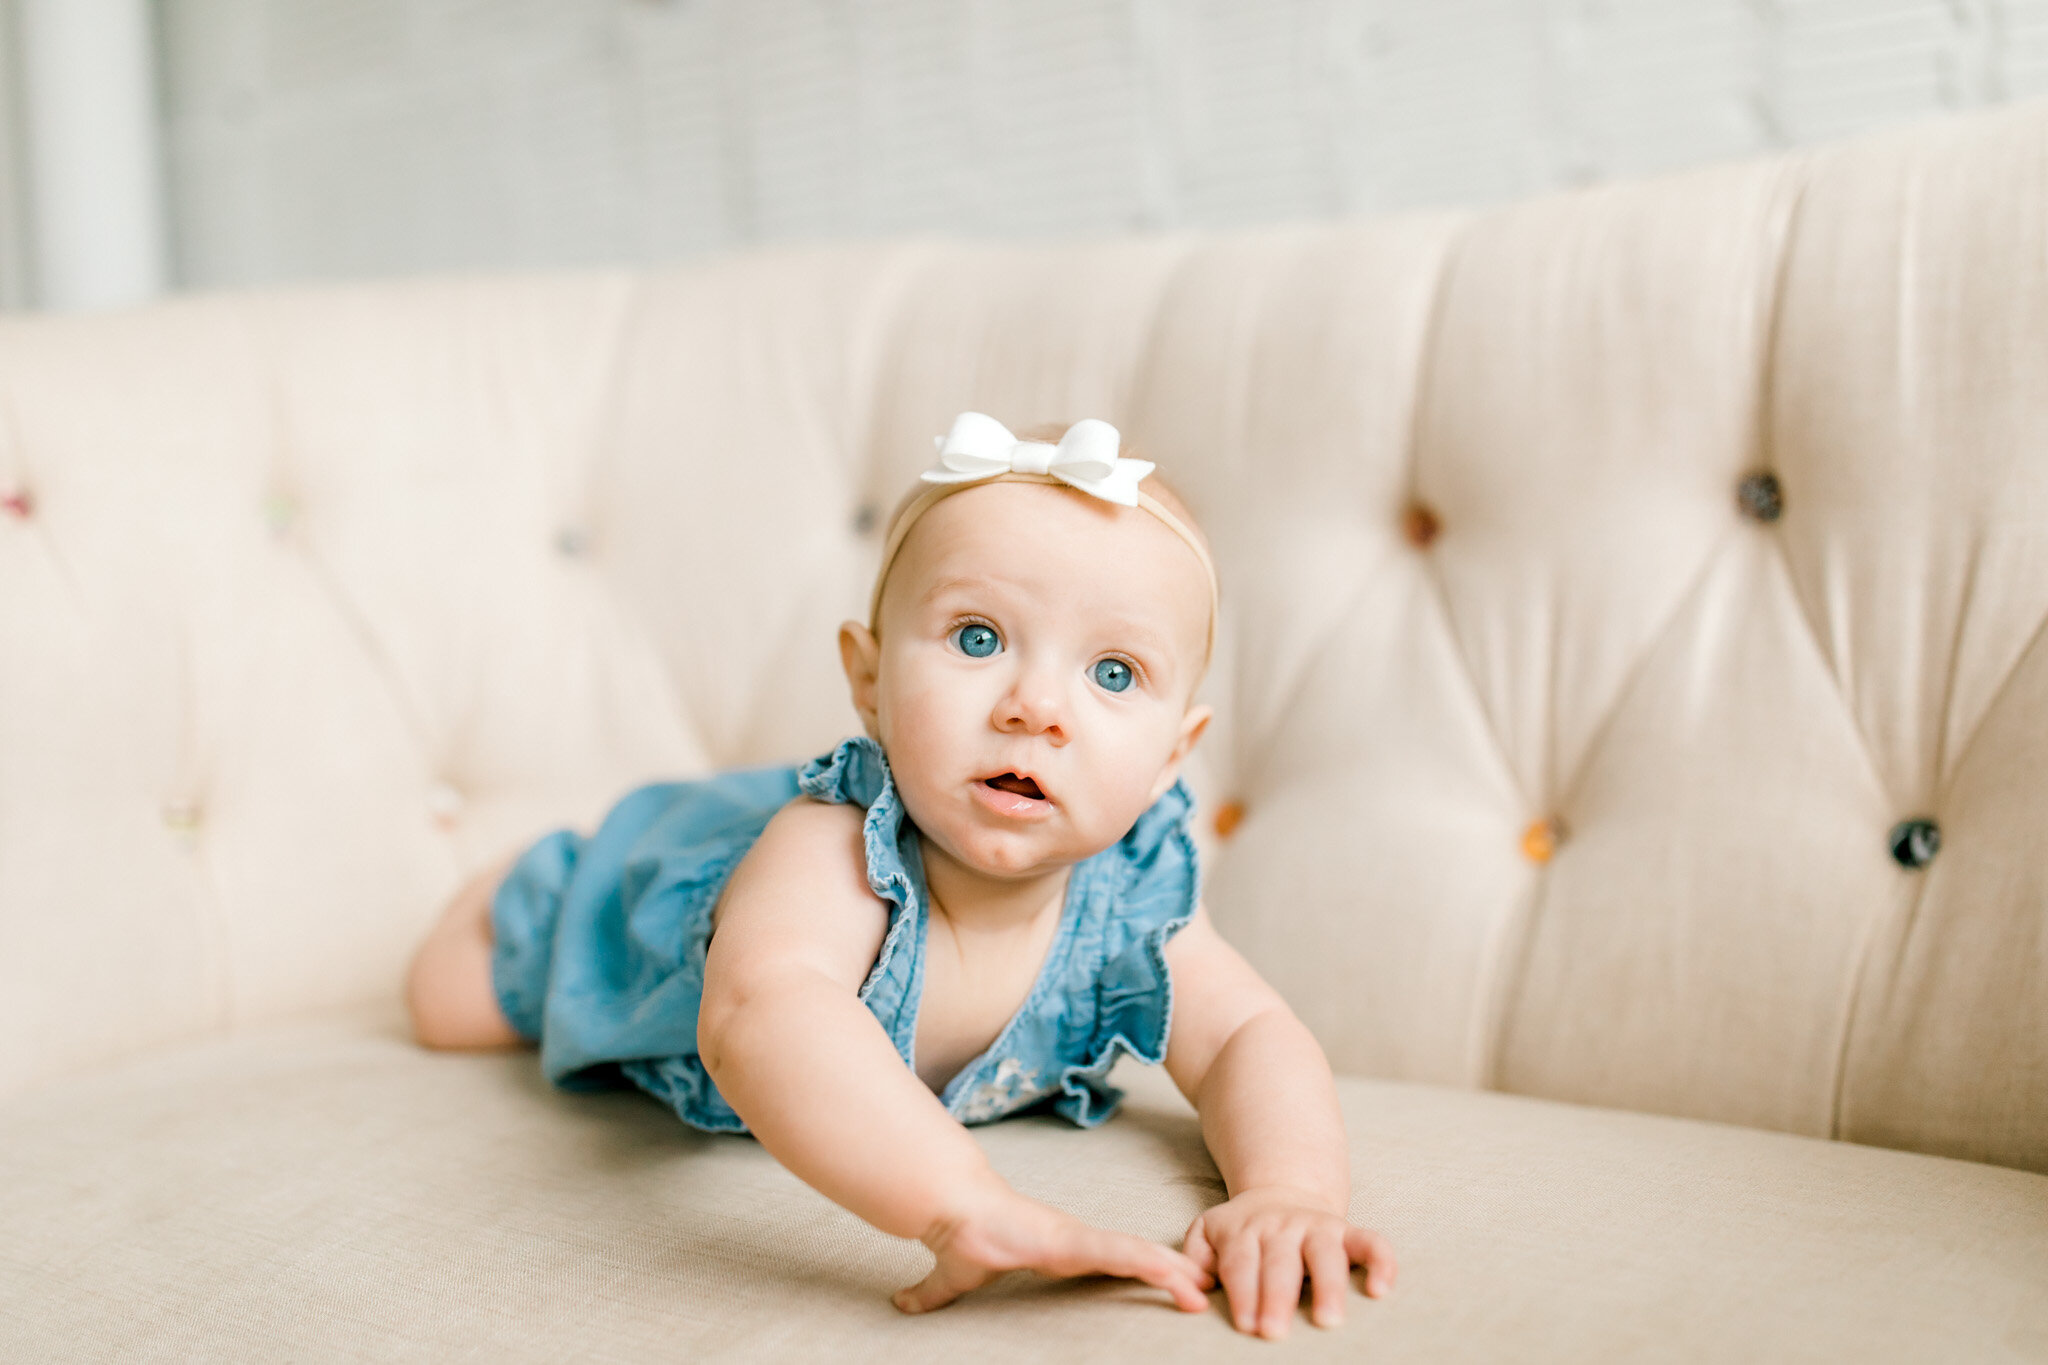 Baby girl 6 month milestone session in Grand Rapids studio | Laurenda Marie Photography | Michigan Family Photographer